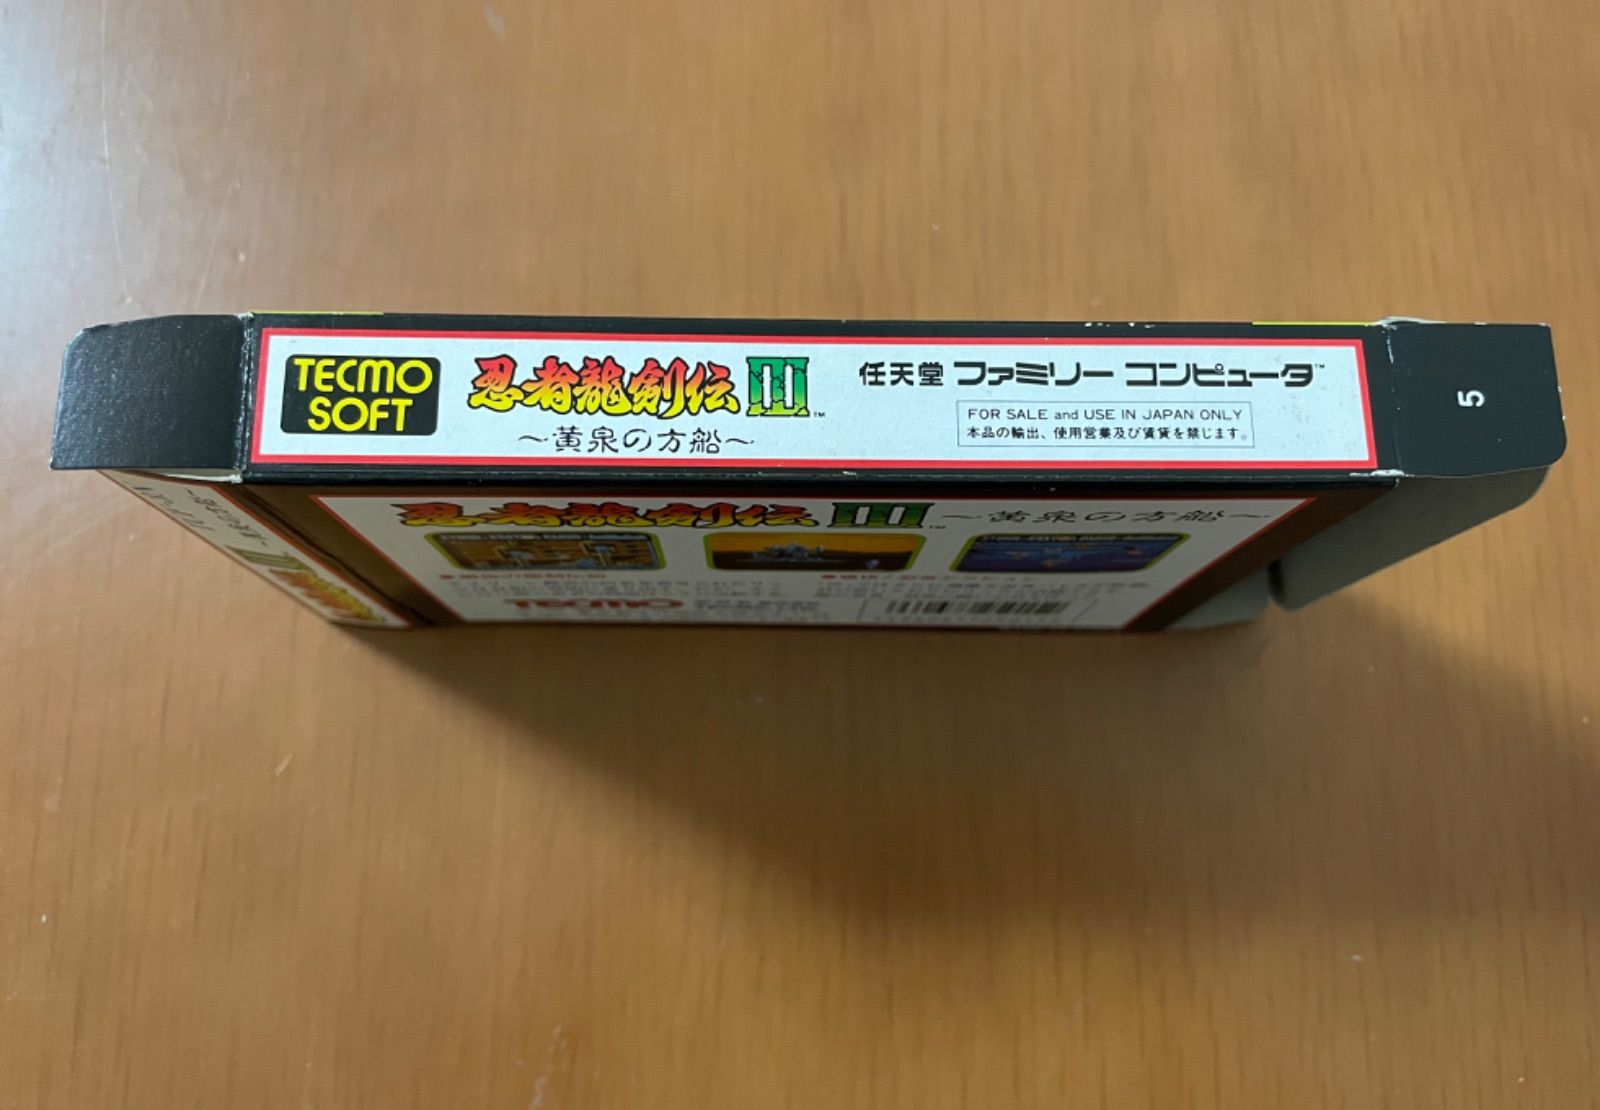 TECMO 忍者龍剣伝3 黄泉の方舟 ファミコンソフト - Nintendo Switch